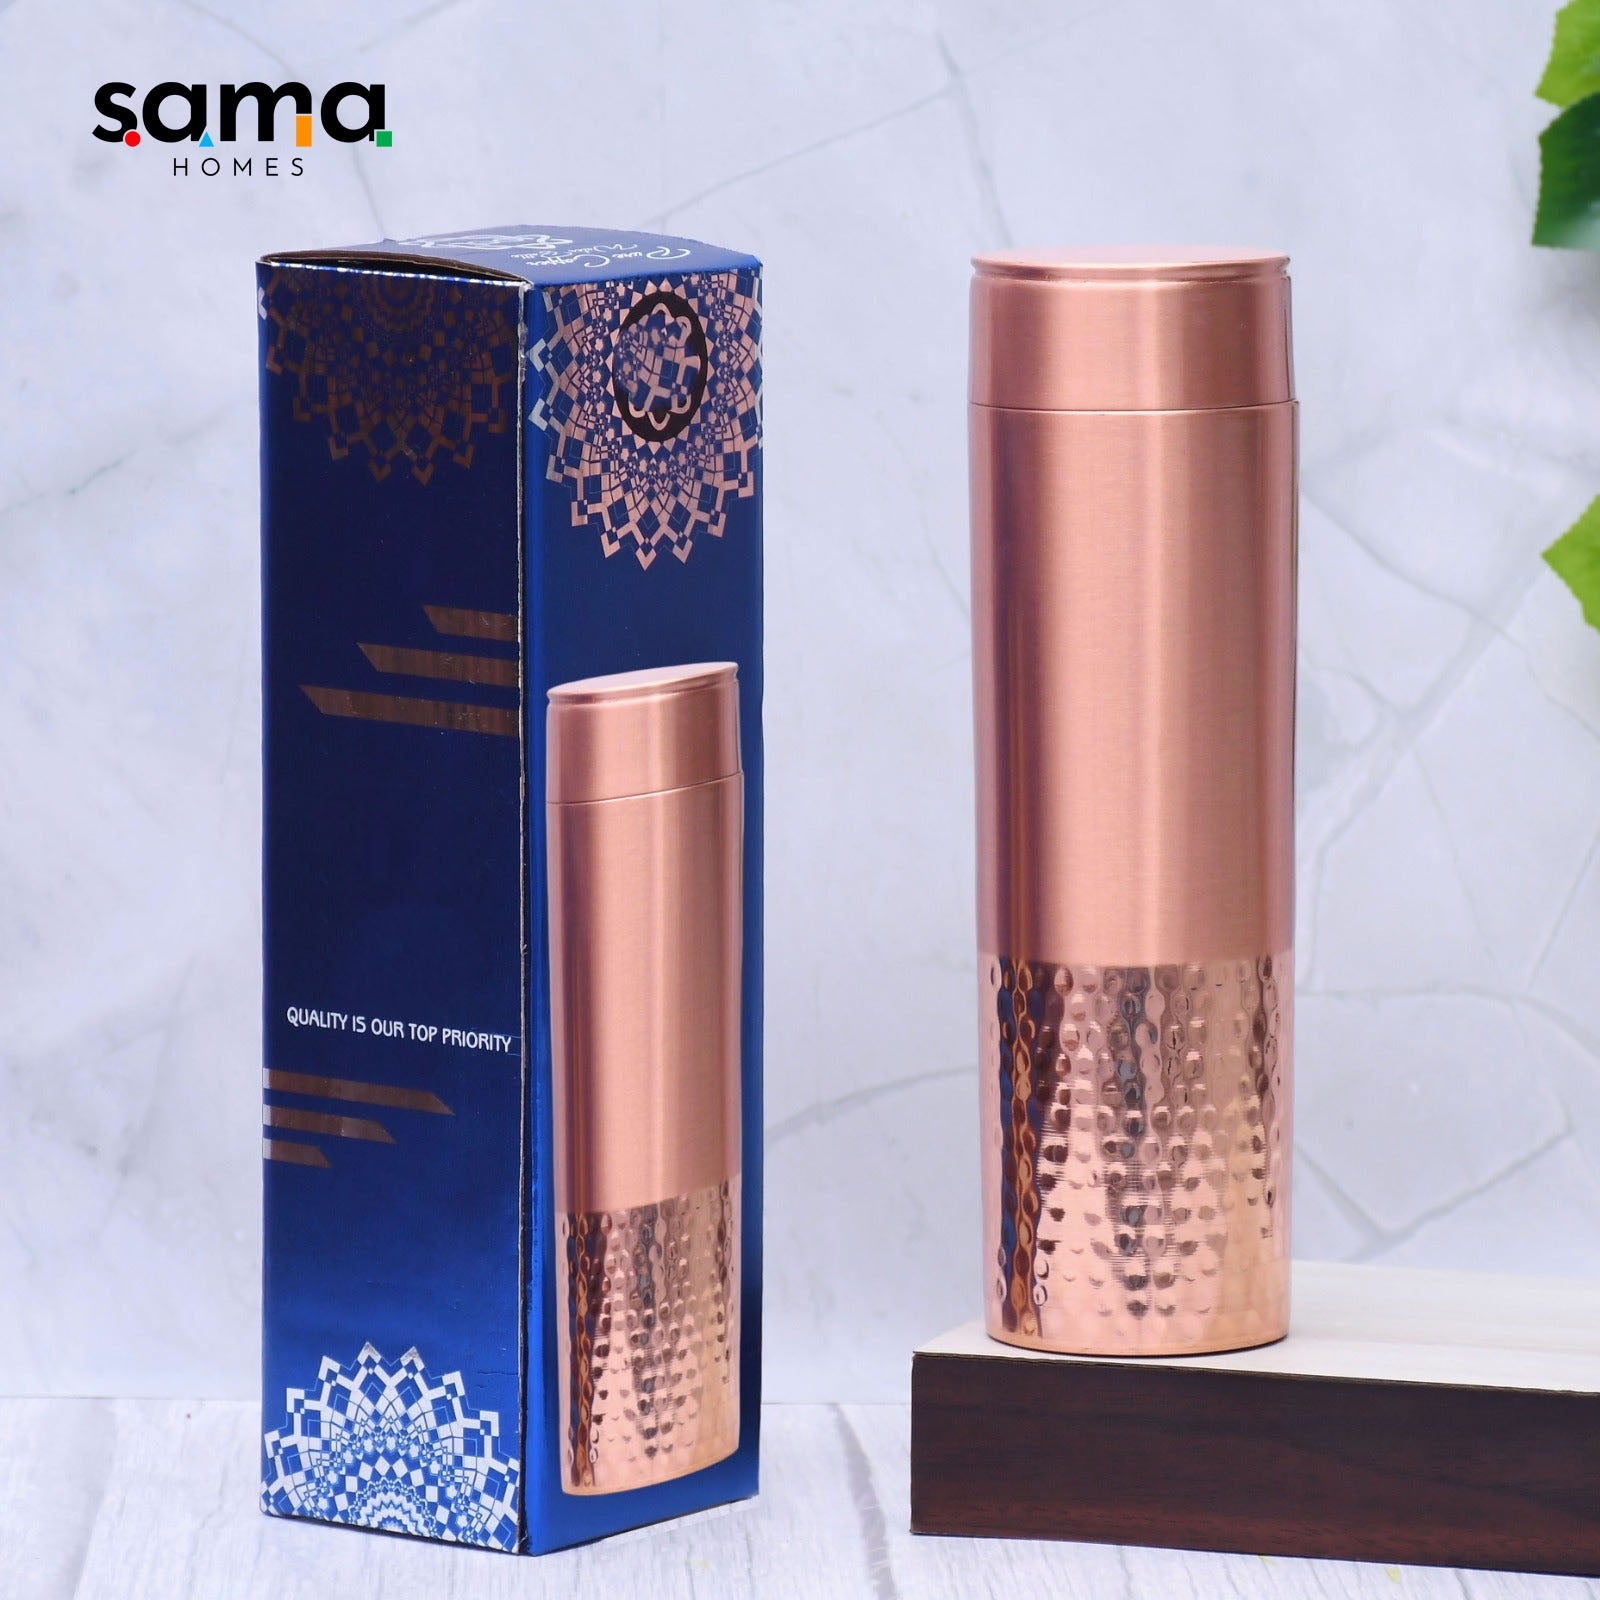 SAMA Homes - pure copper water bottle half hammered and half matt straight